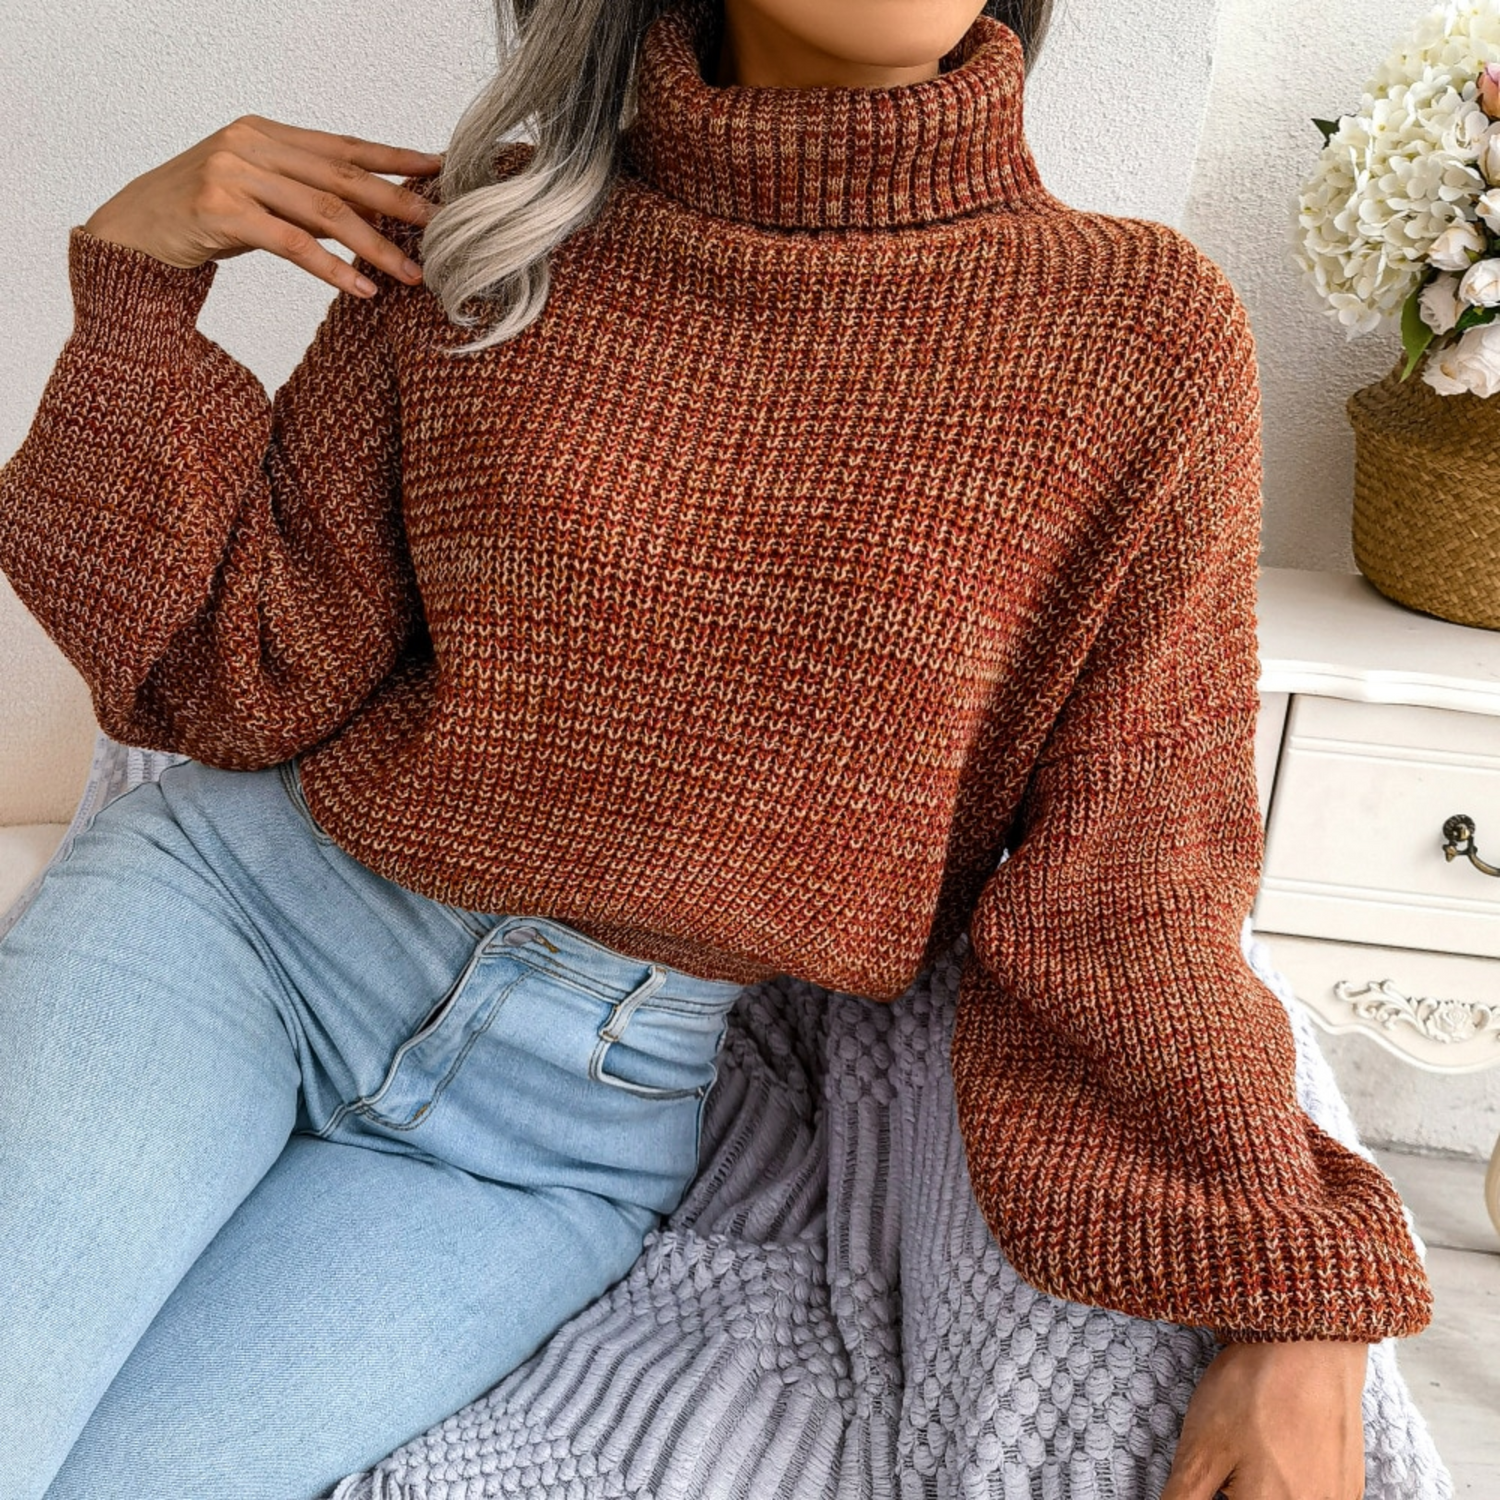 Soraya - Brown Knitted Turtleneck Sweater Top - Model Mannequin